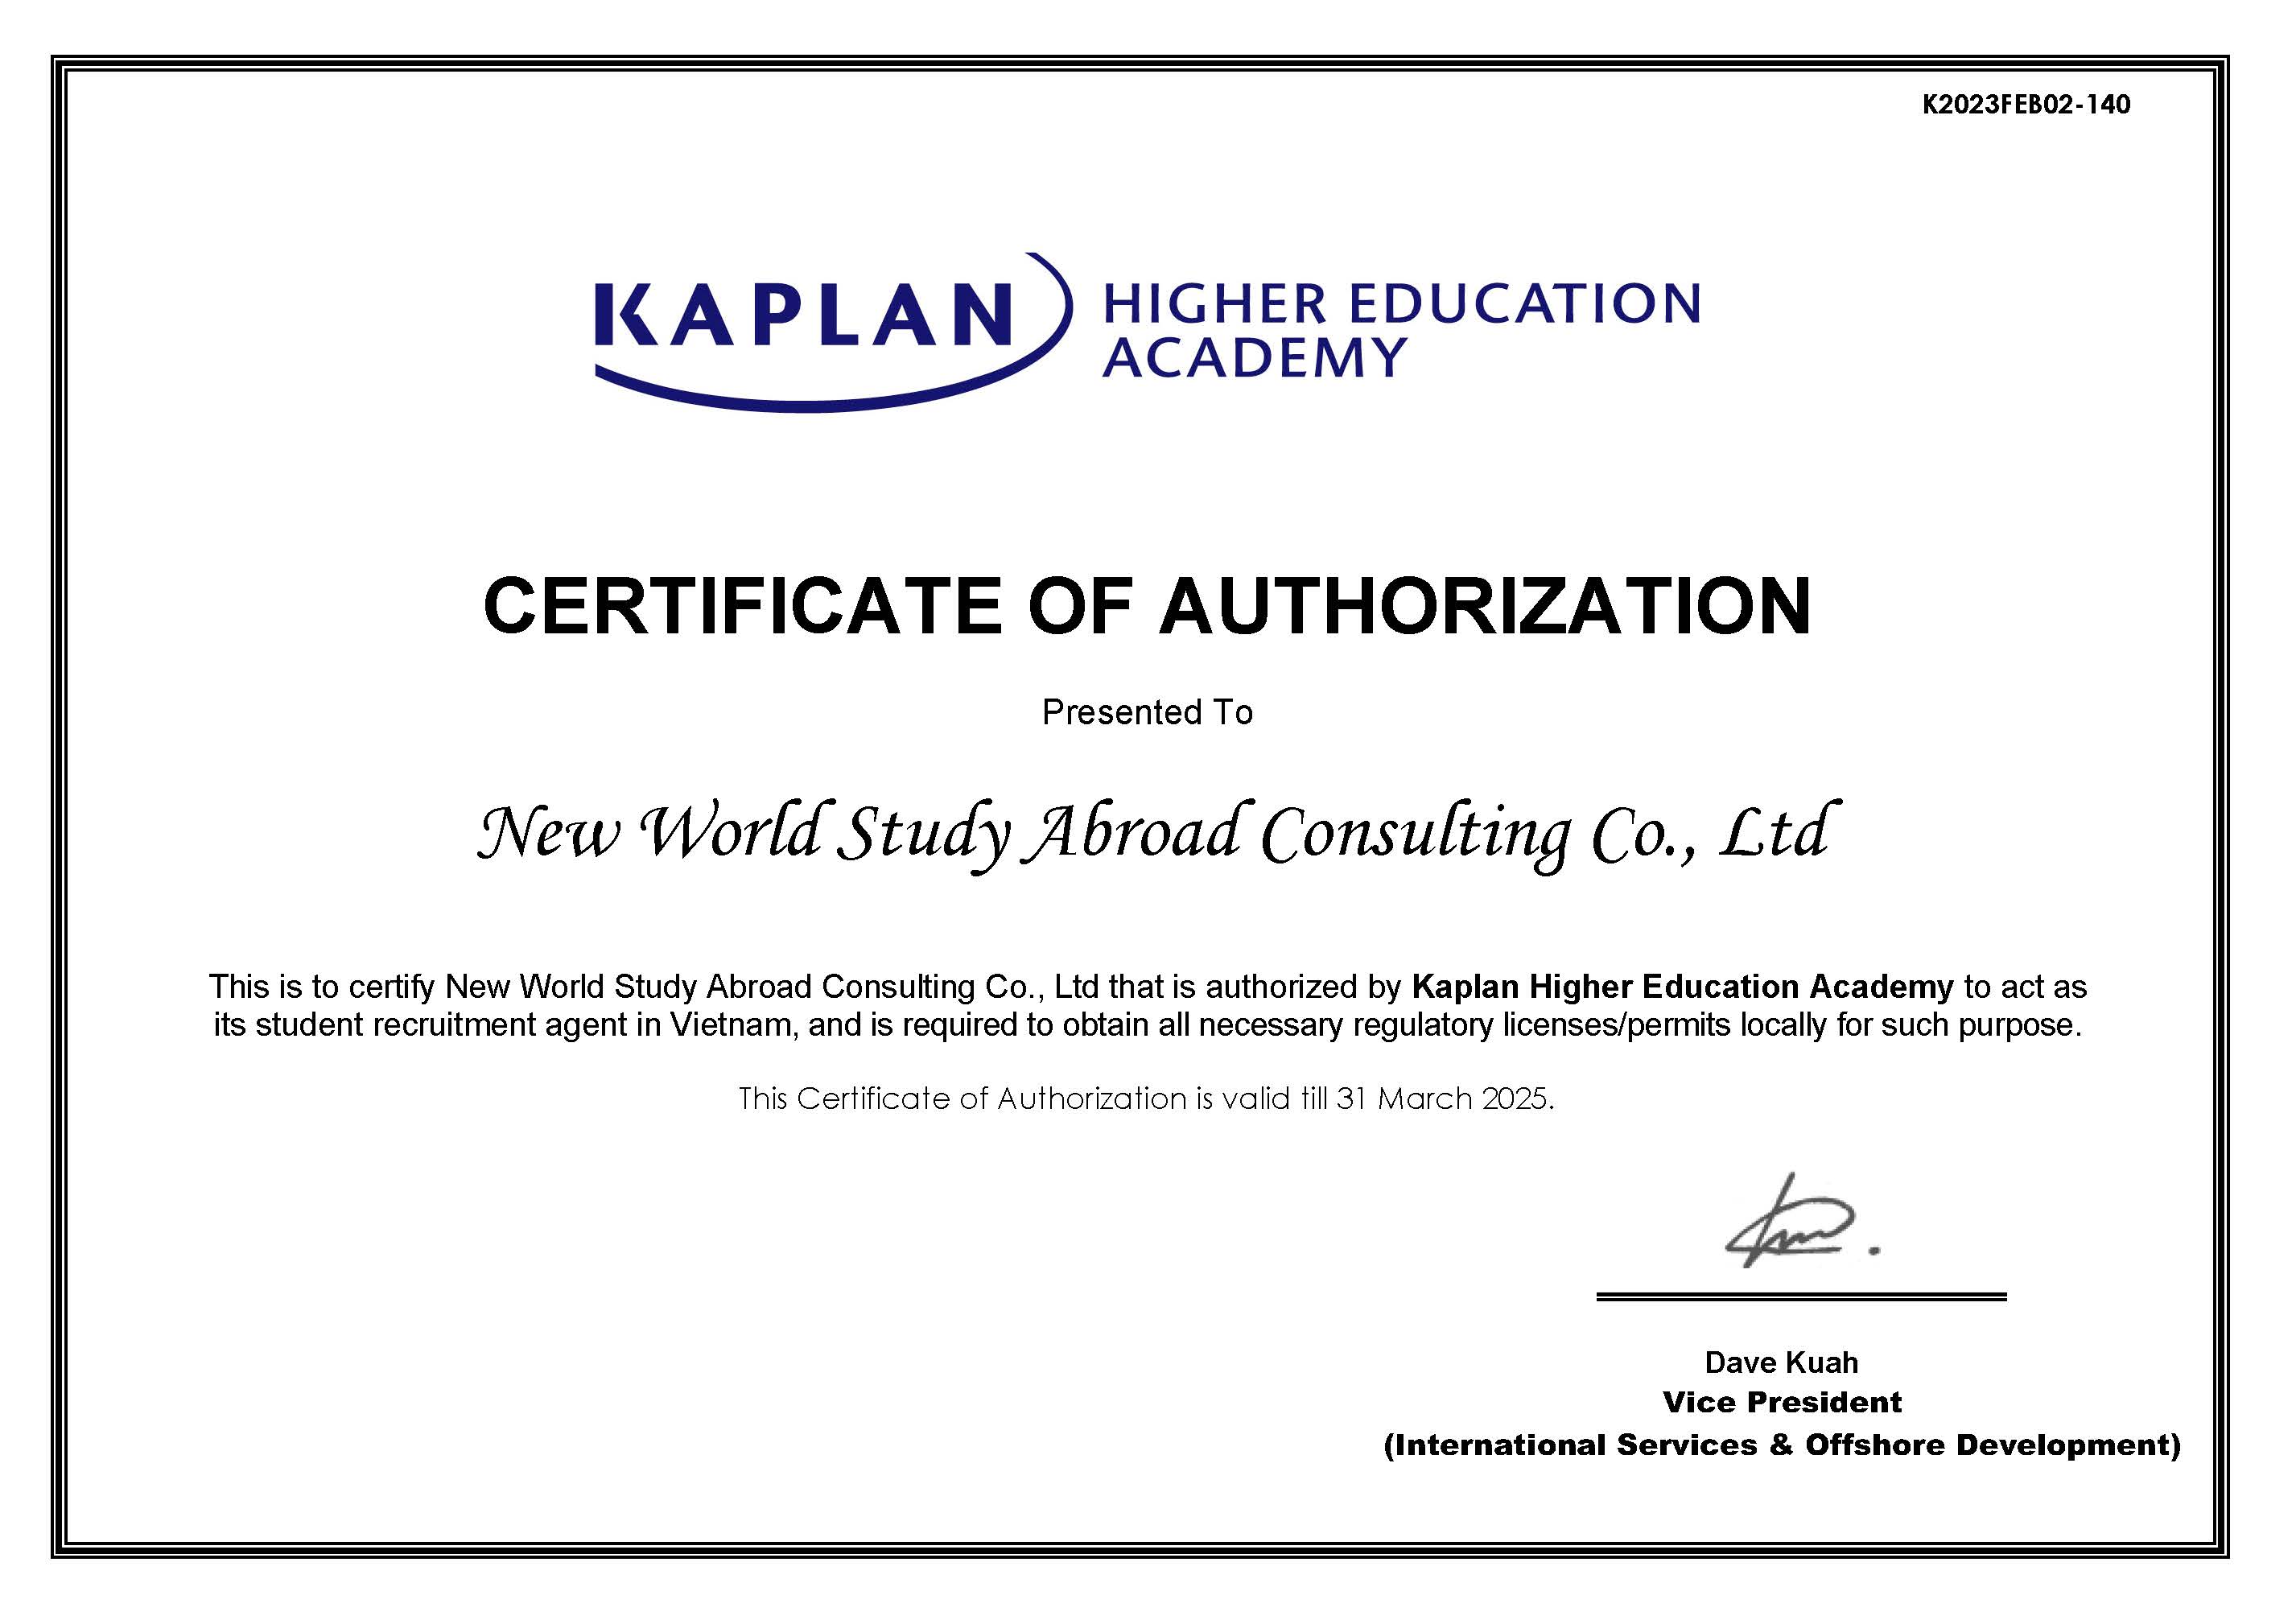 Kaplan Higher Education Academy